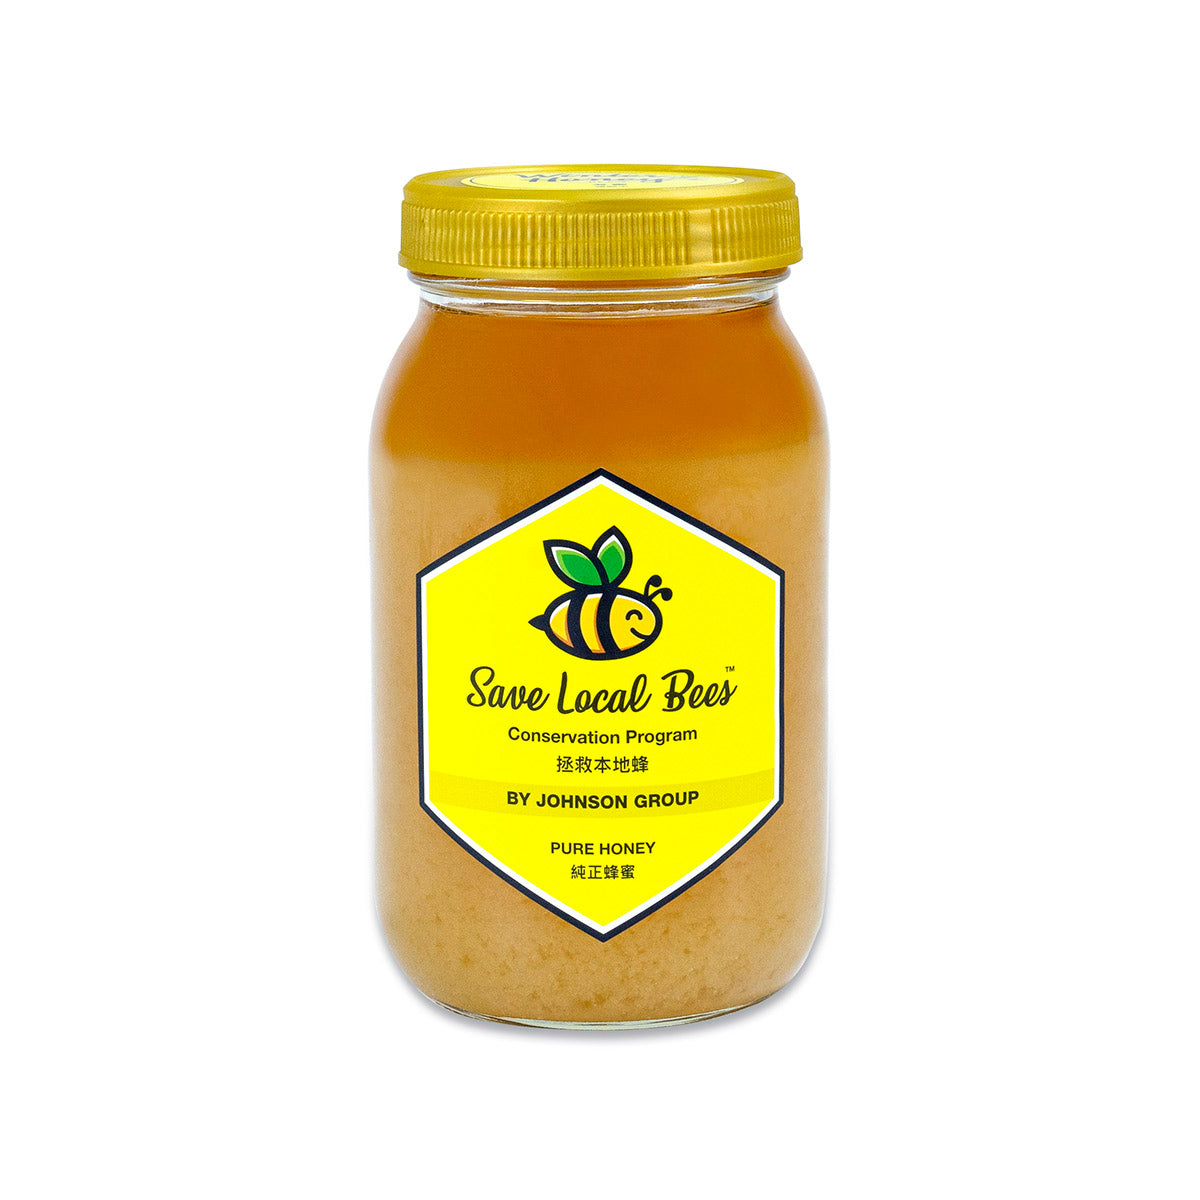 Save Local Bees Winter Honey (Ivy Tree)